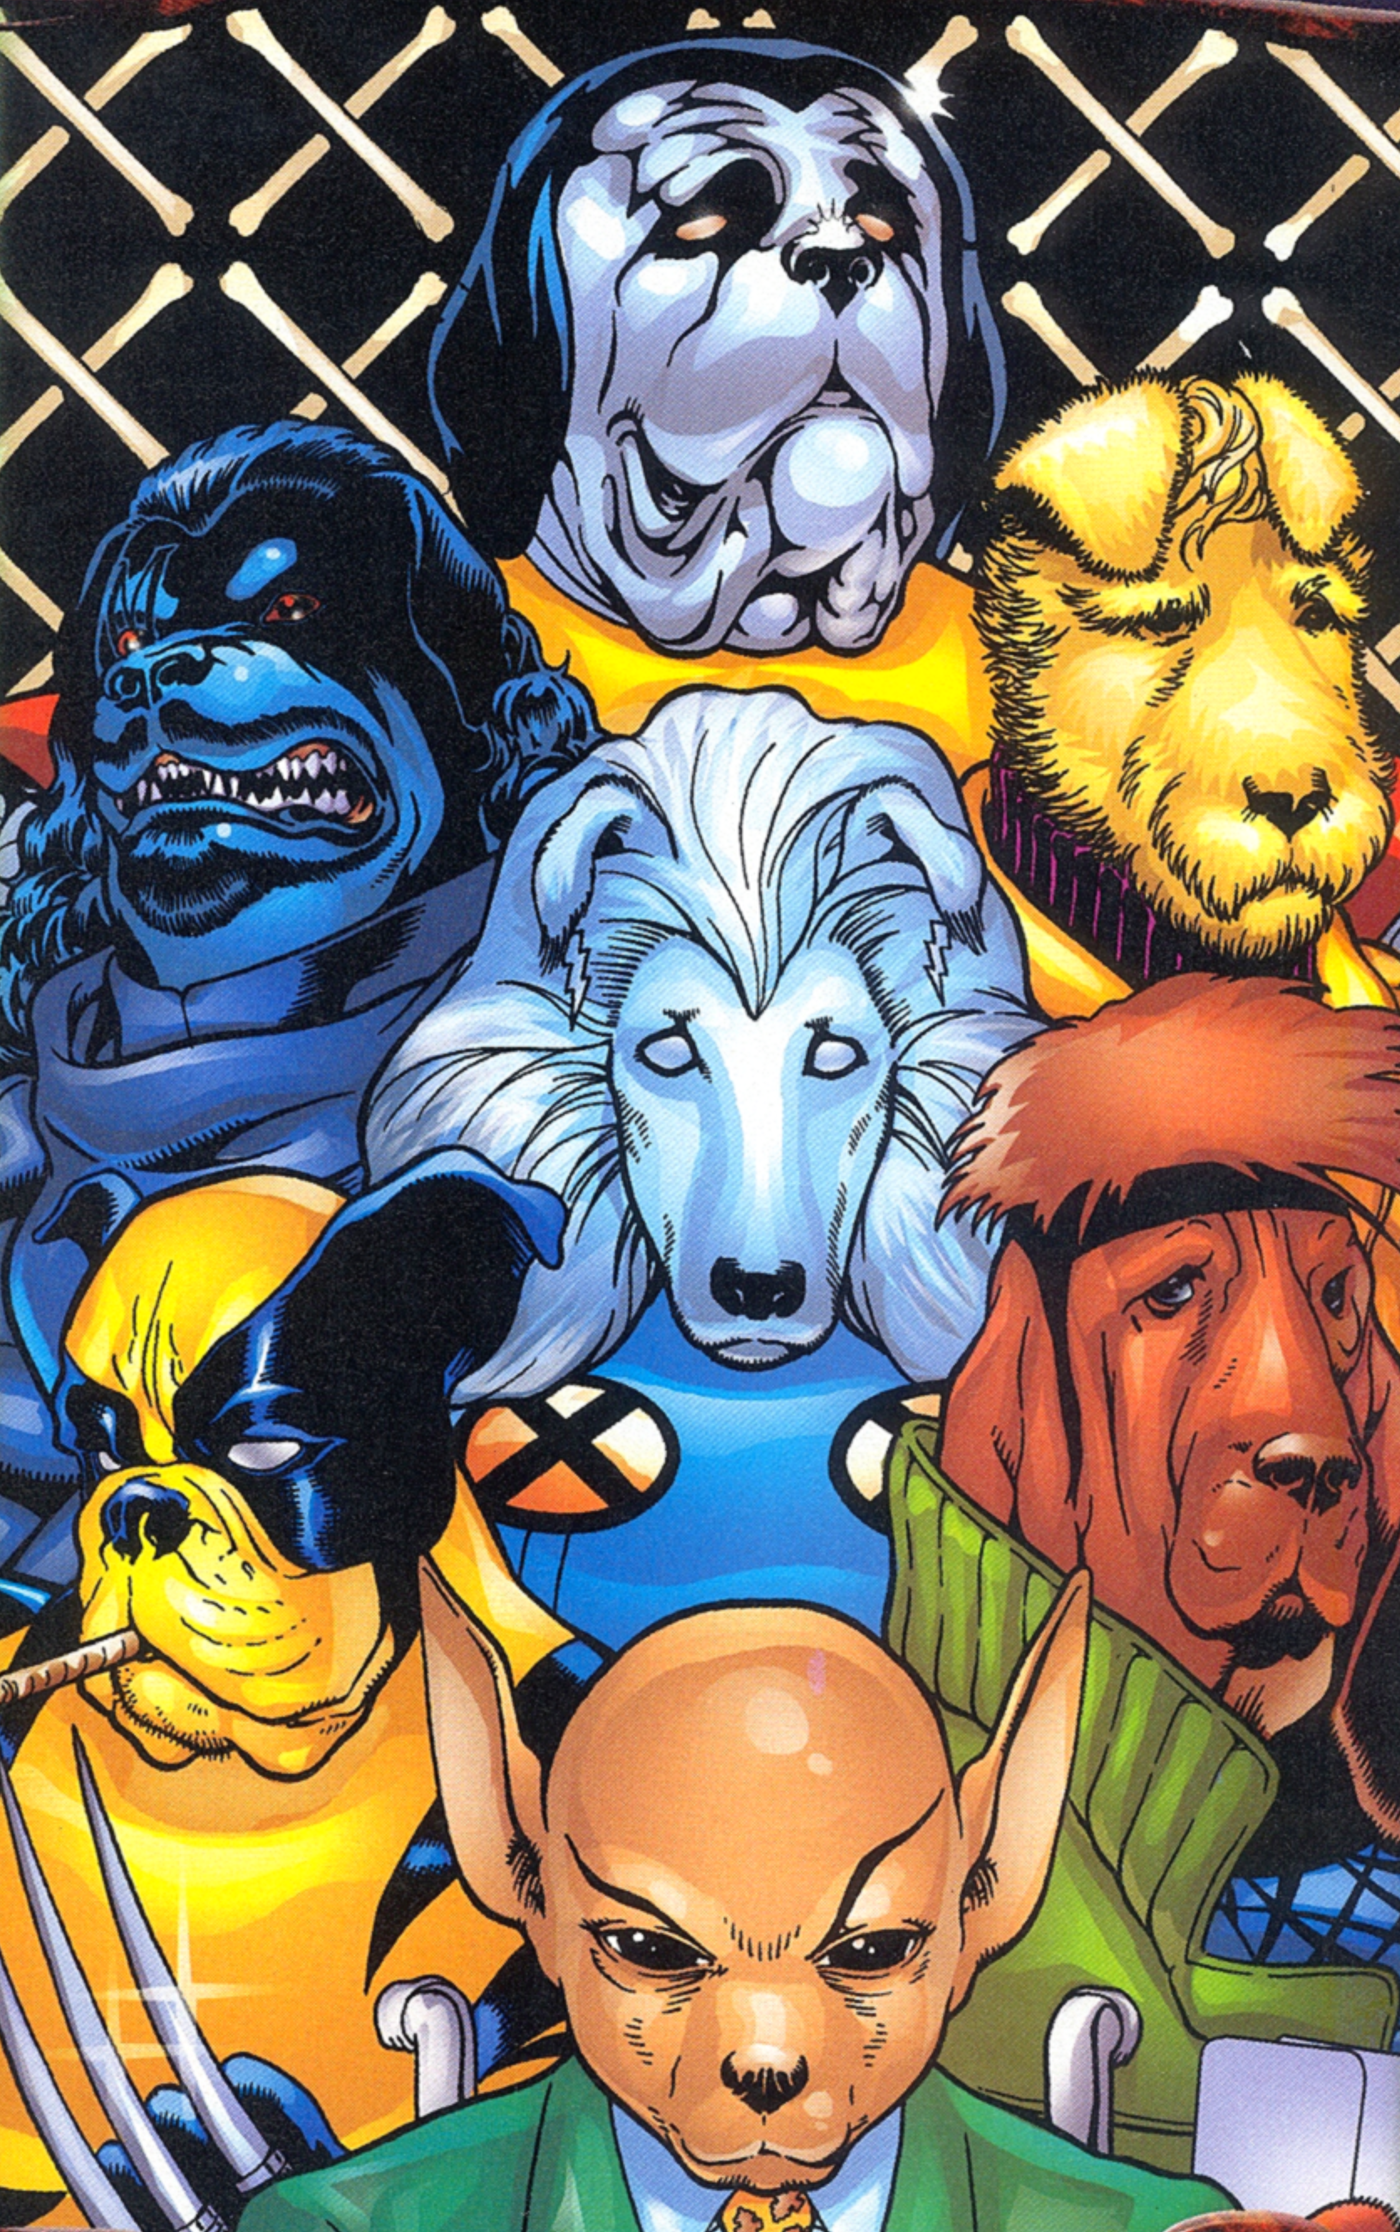 X-Men’s Official Dog Team Are Marvel’s Best Variants